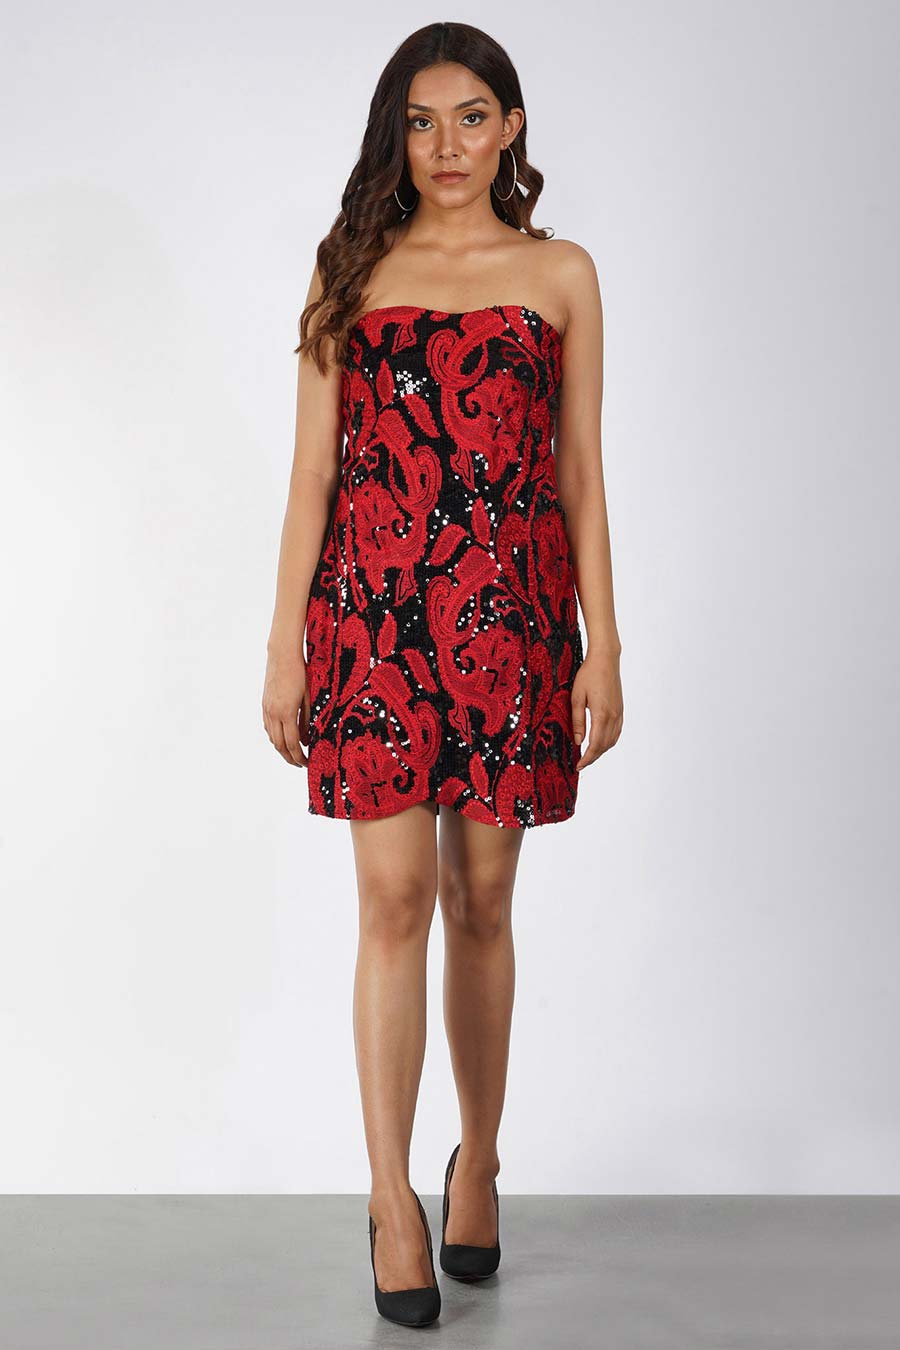 Black & Red Embroidered Short Dress